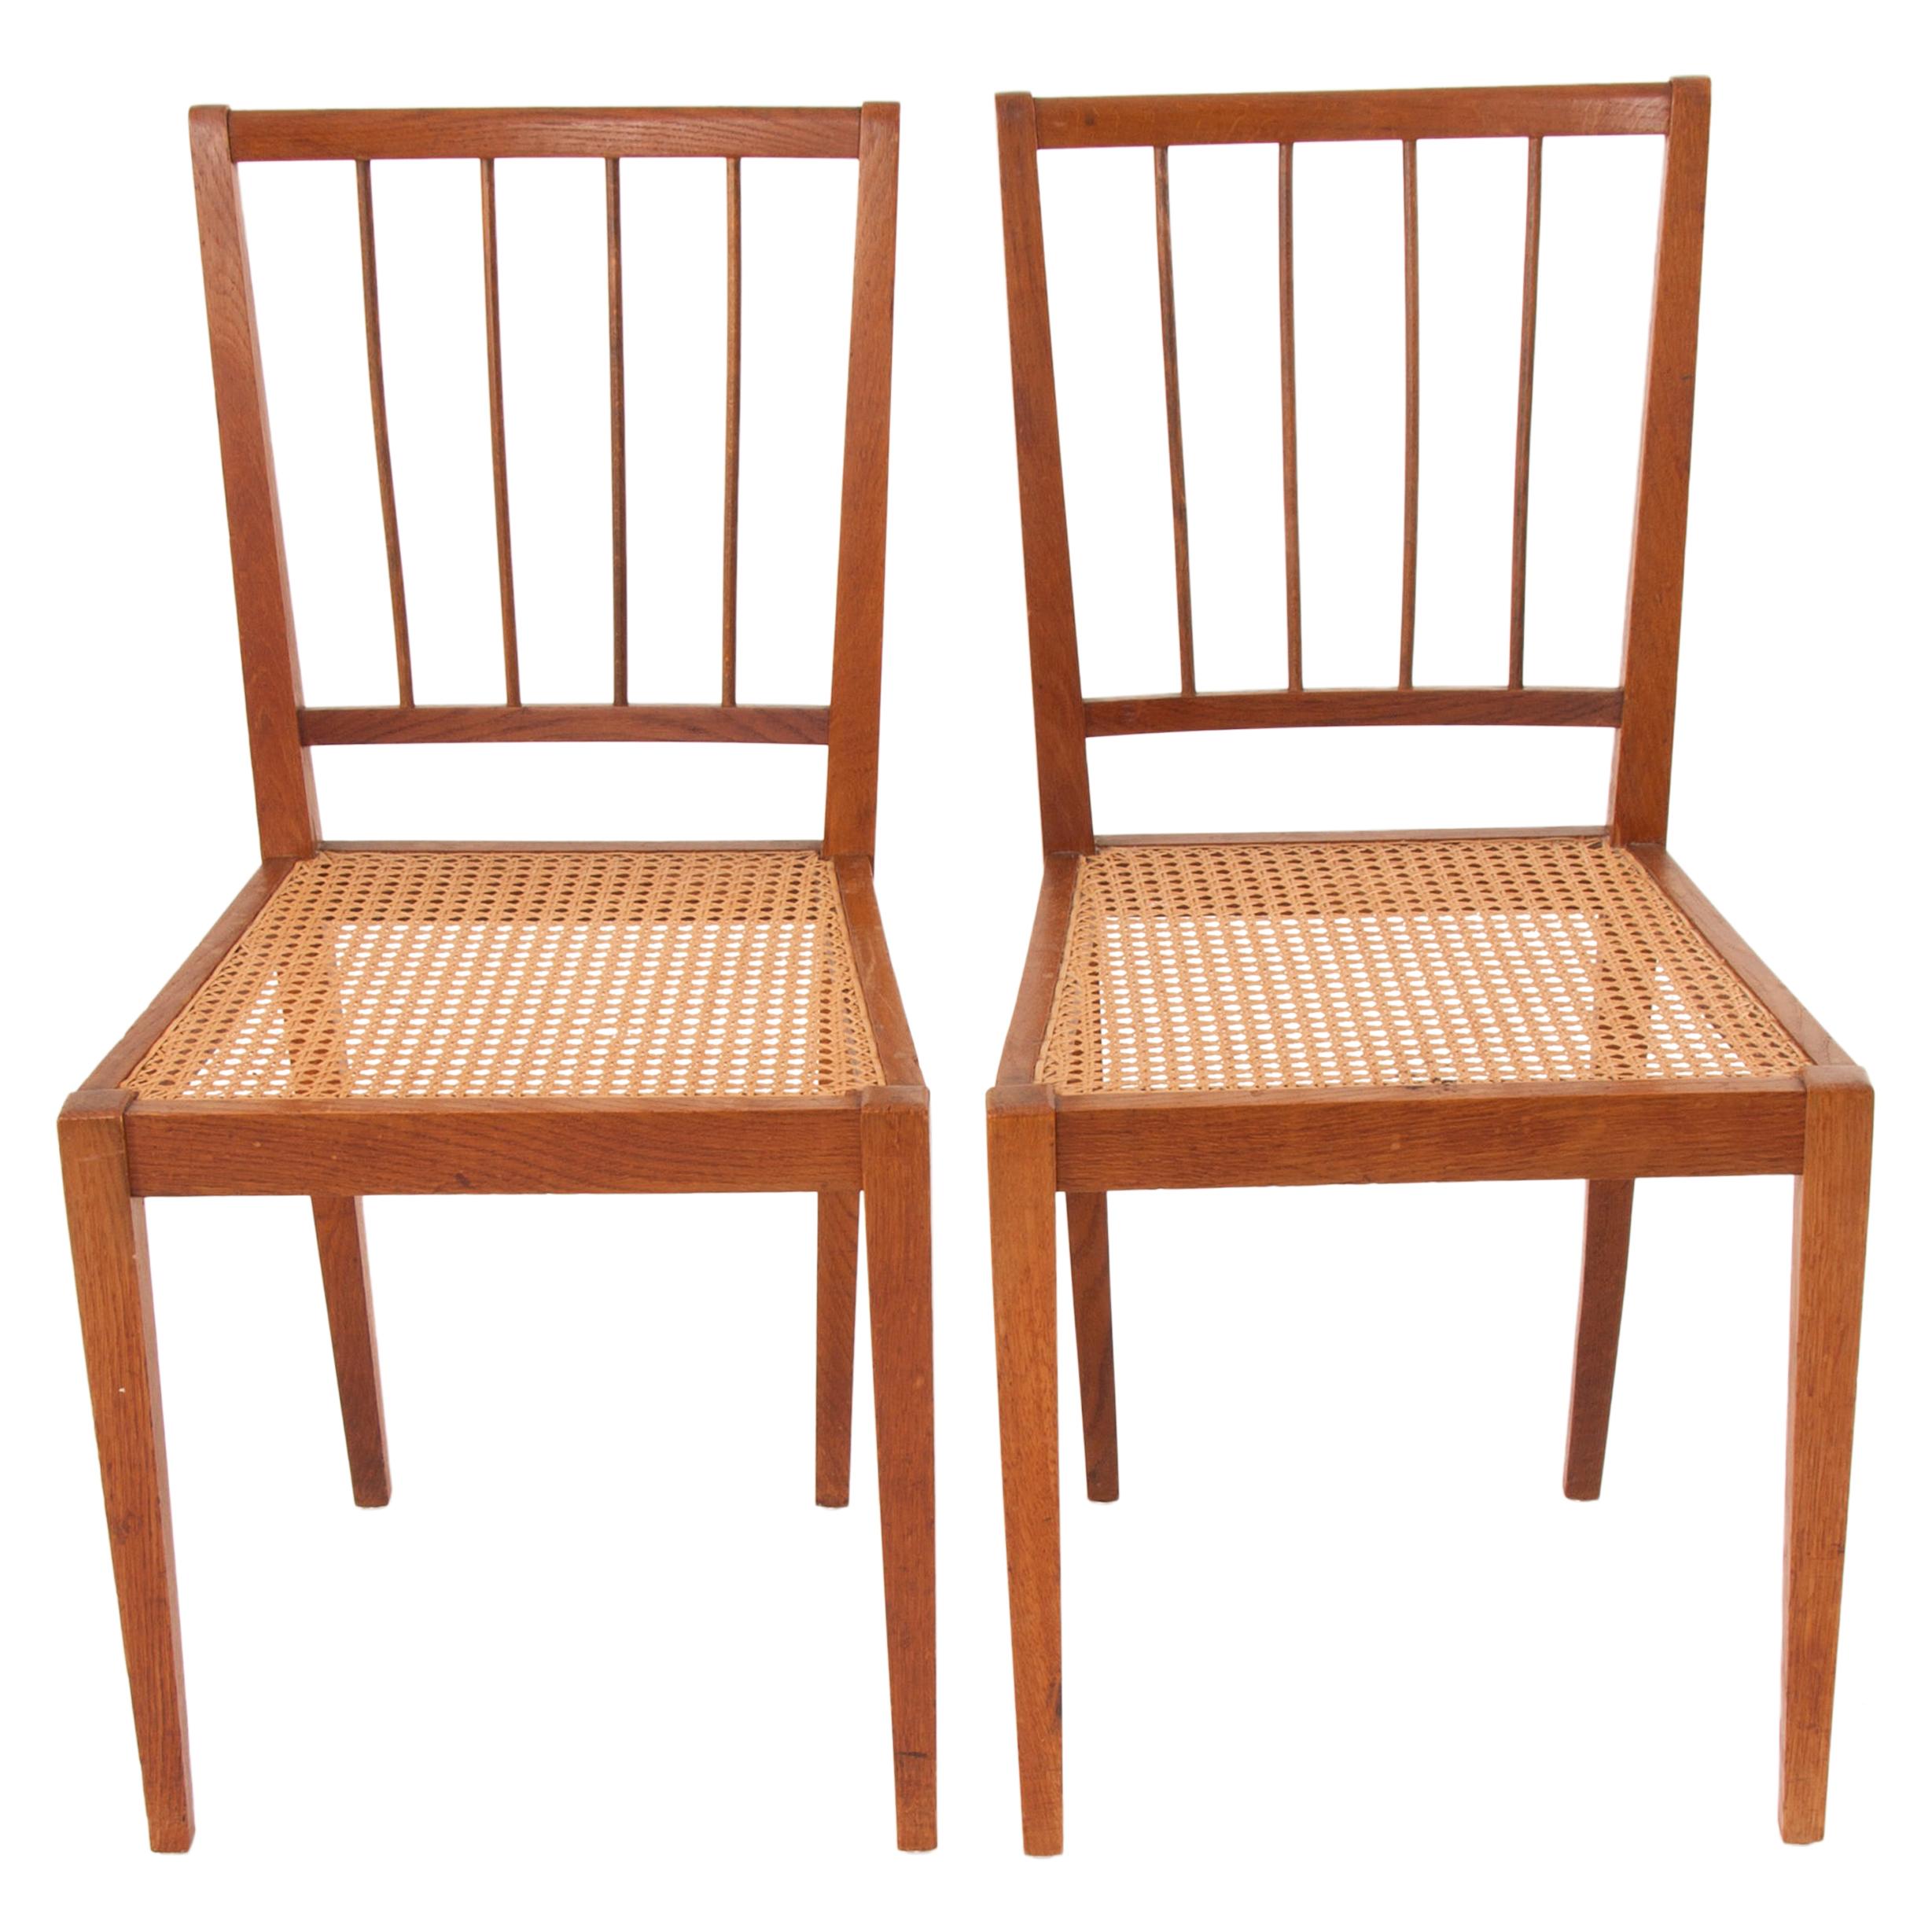 Two Elegant Werkstätte Hagenauer Chairs M006 by Julius Jirasek, Austria, 1930 For Sale